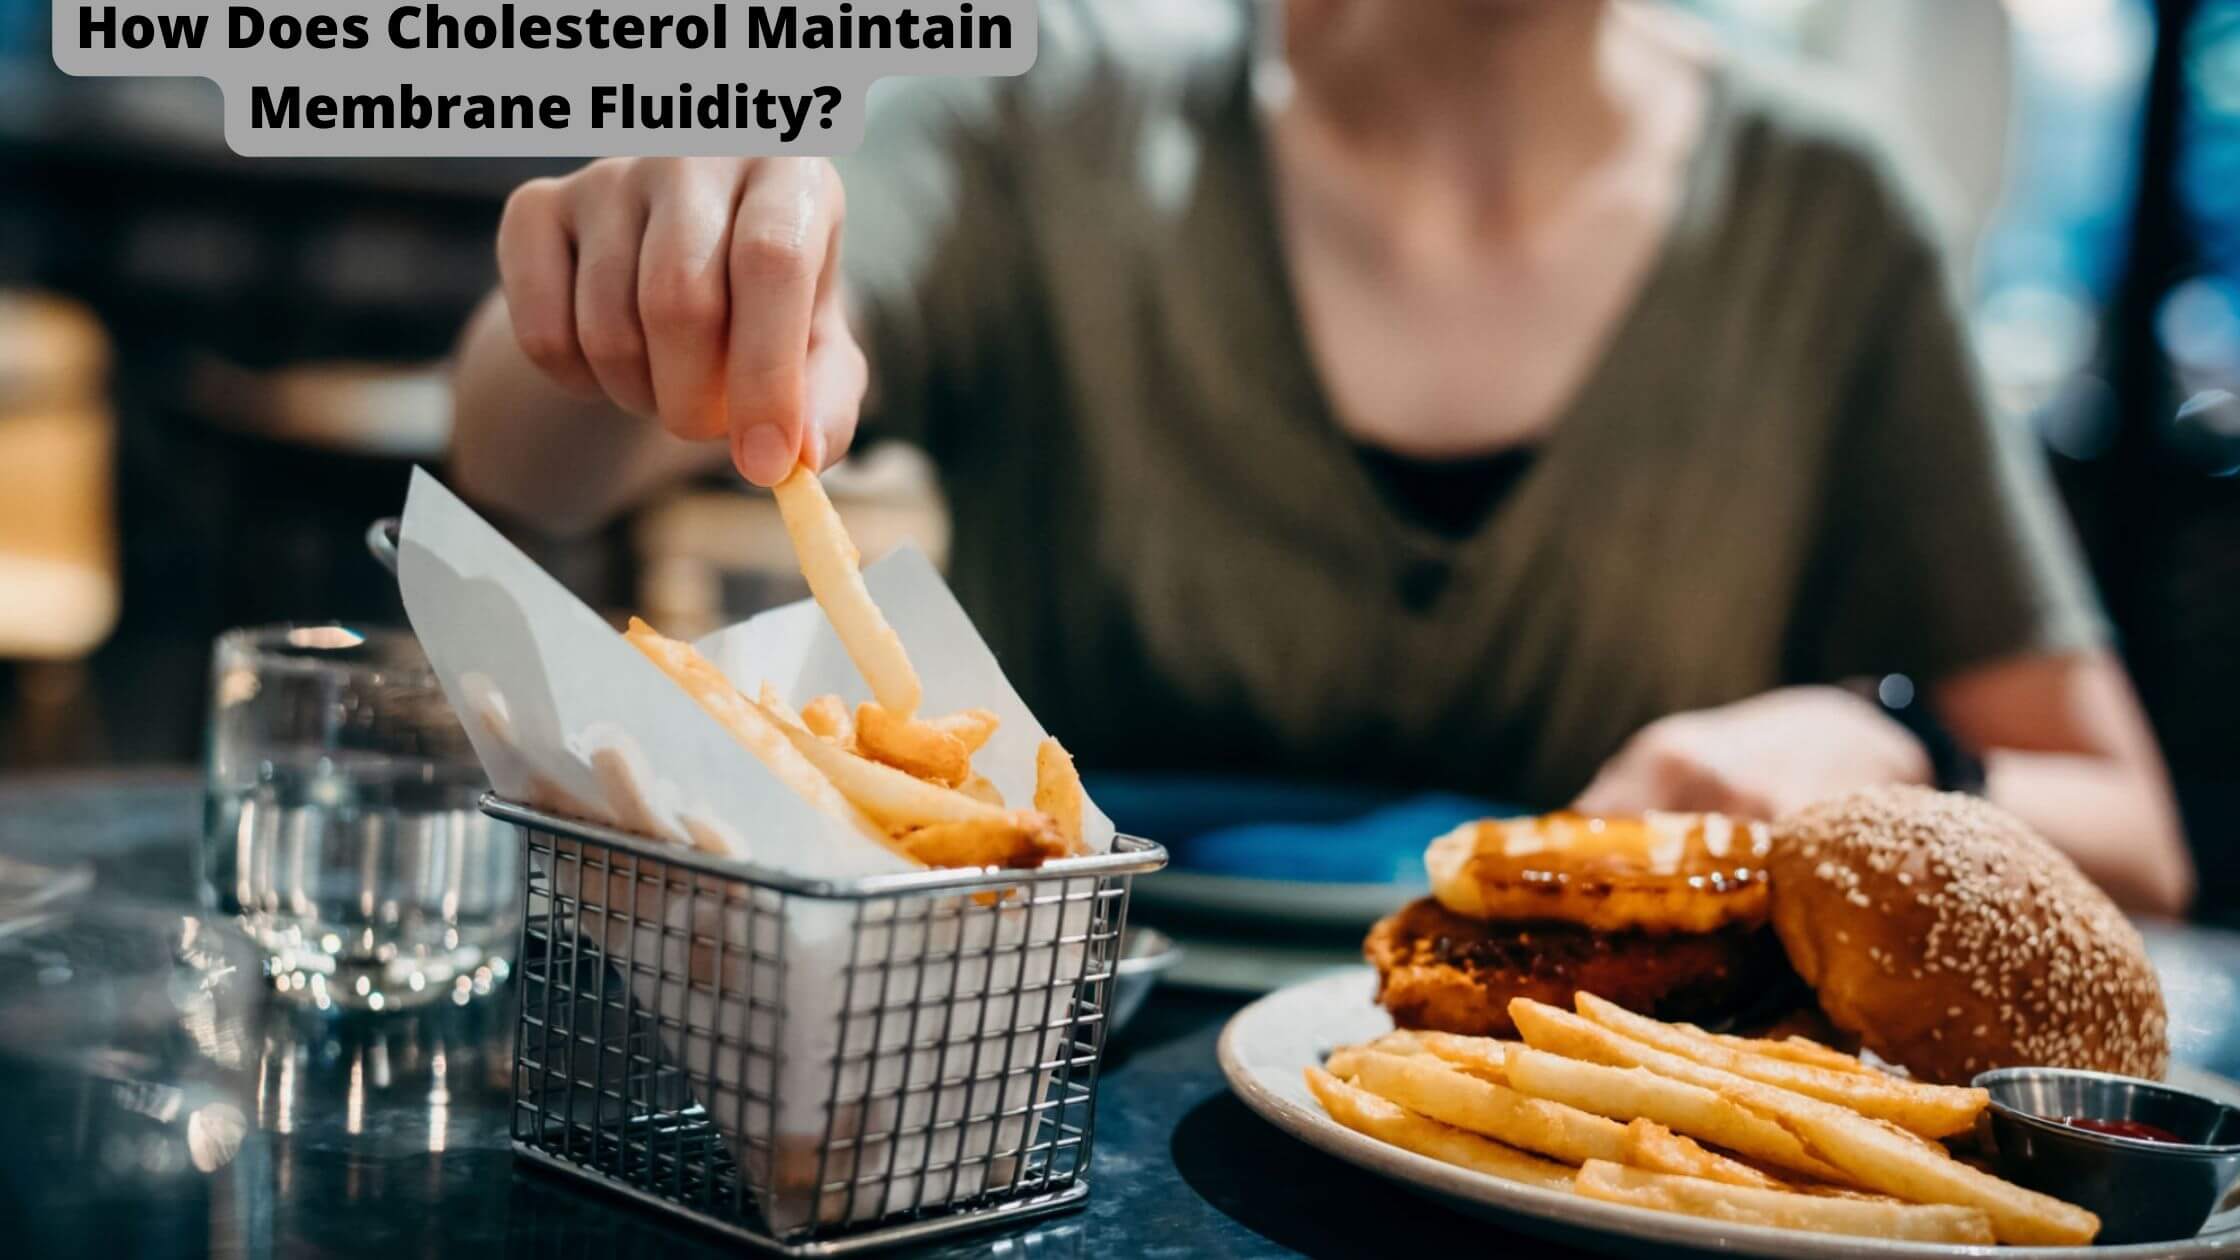 Cholesterol Maintain Membrane Fluidity